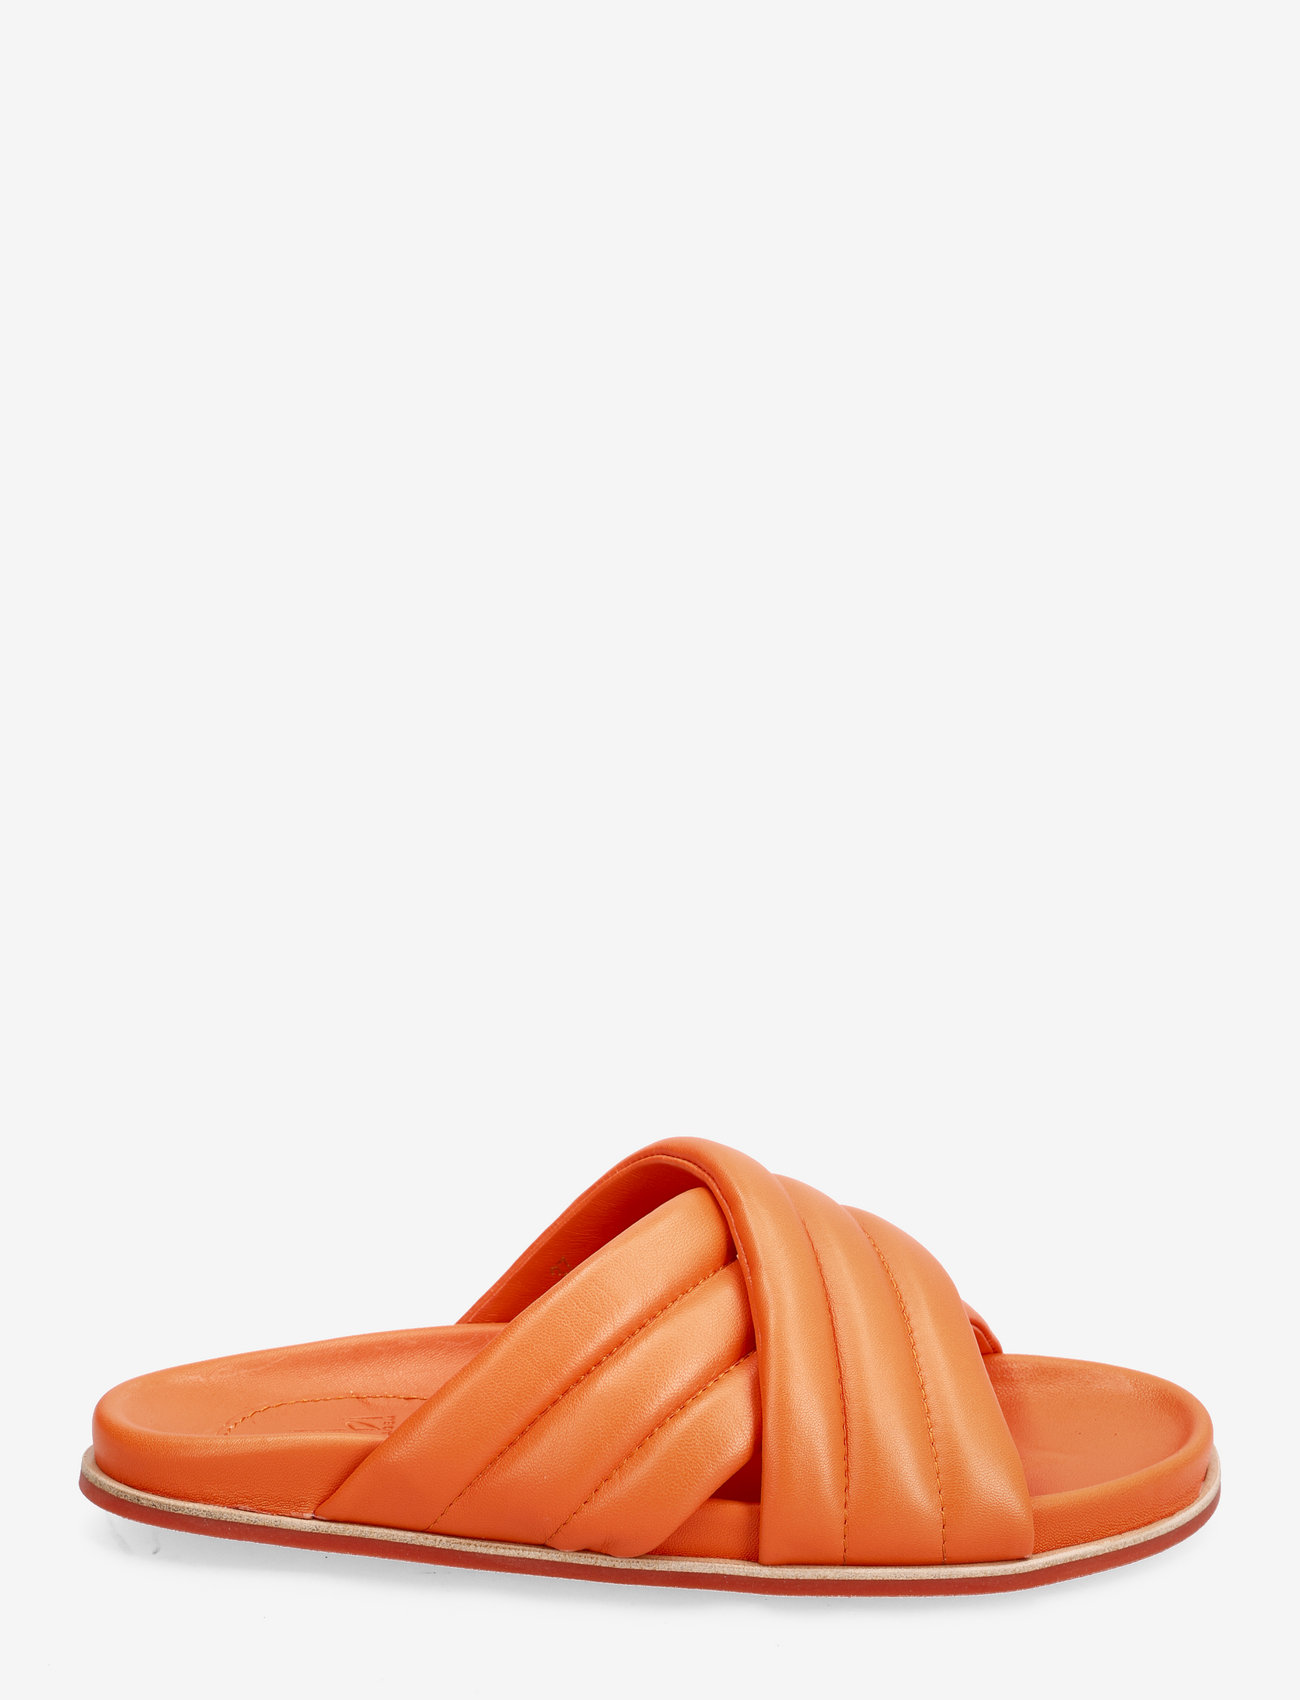 Billi Bi - C5573 - flade sandaler - orange nappa - 1